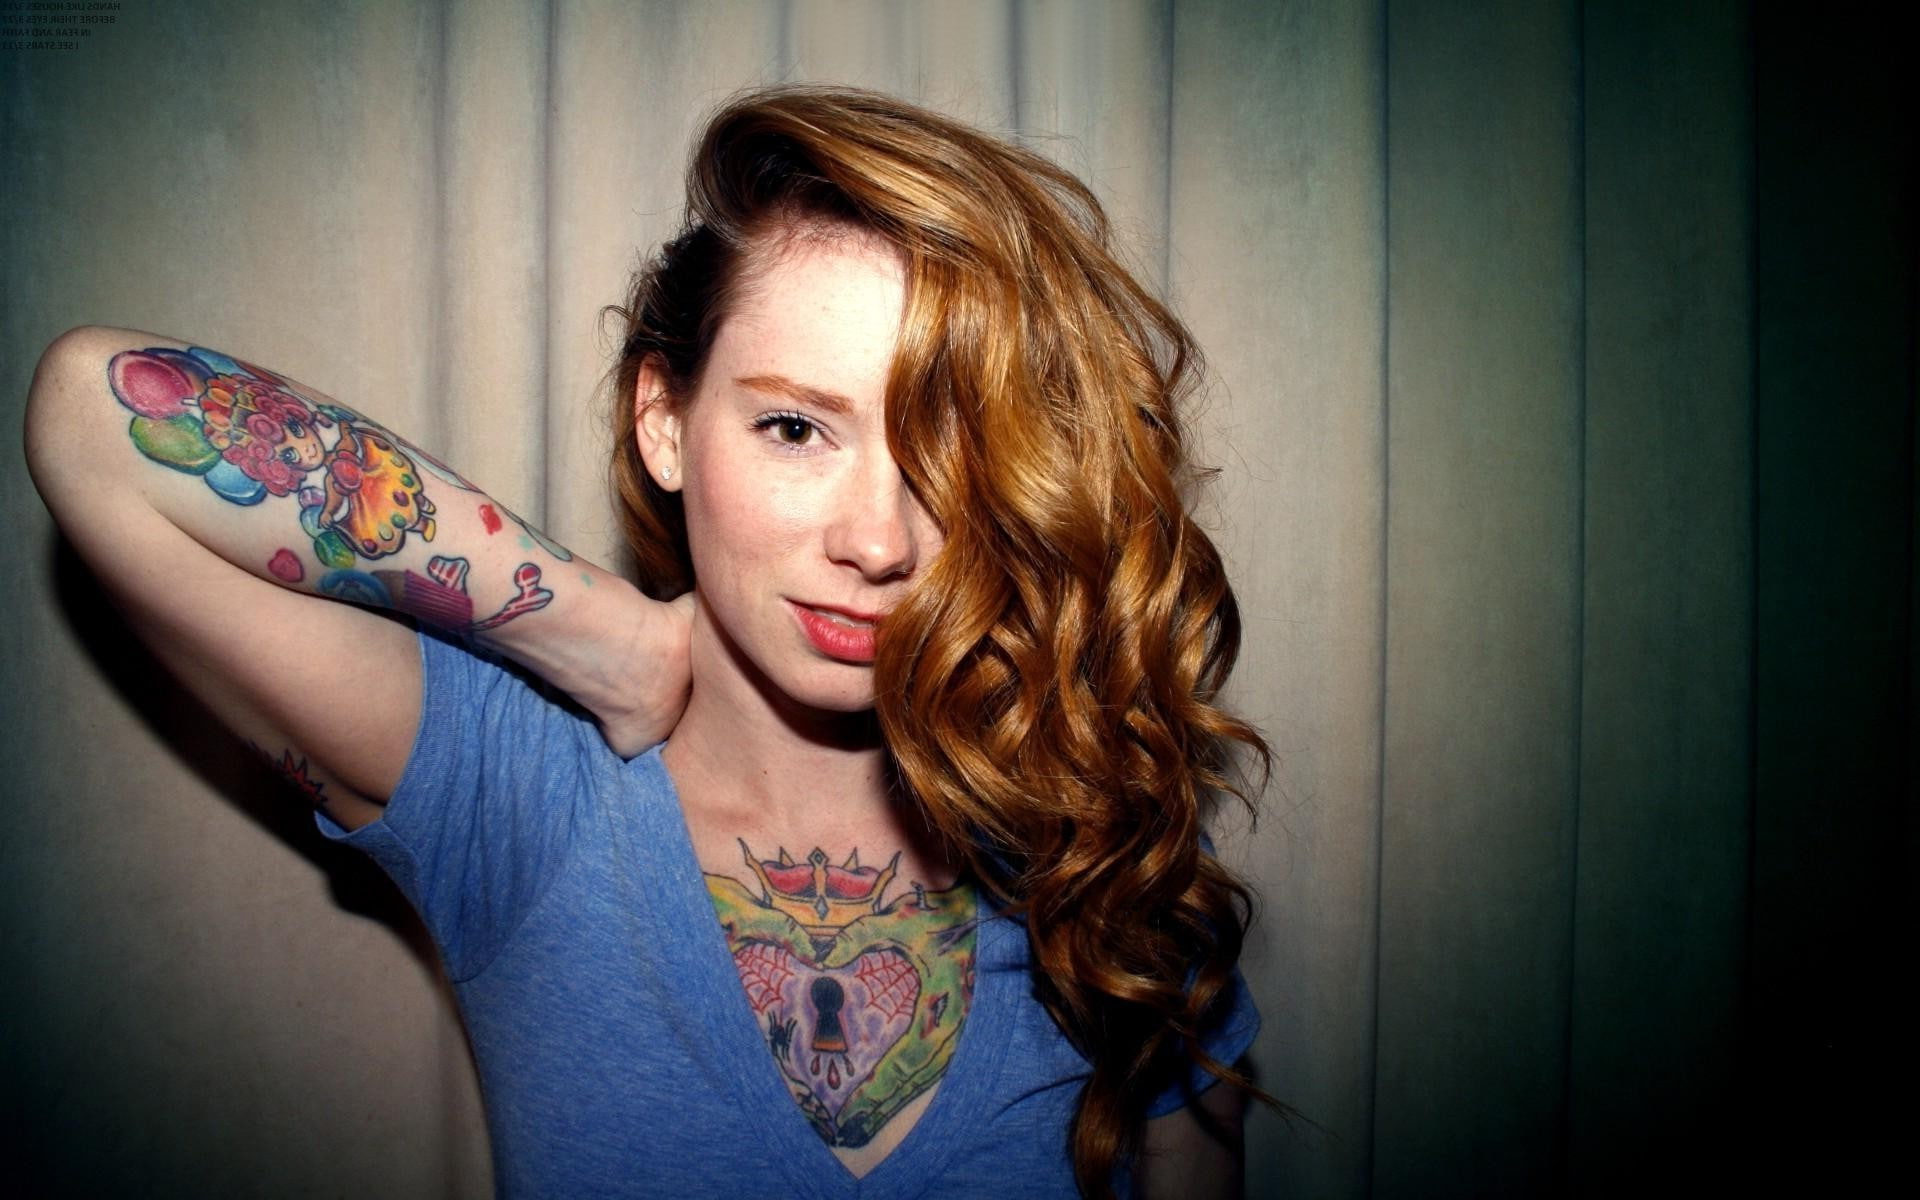 Free Download Hd Wallpaper Women Curly Hair Tattoos Redhead Looking At Viewer Hattie Watson